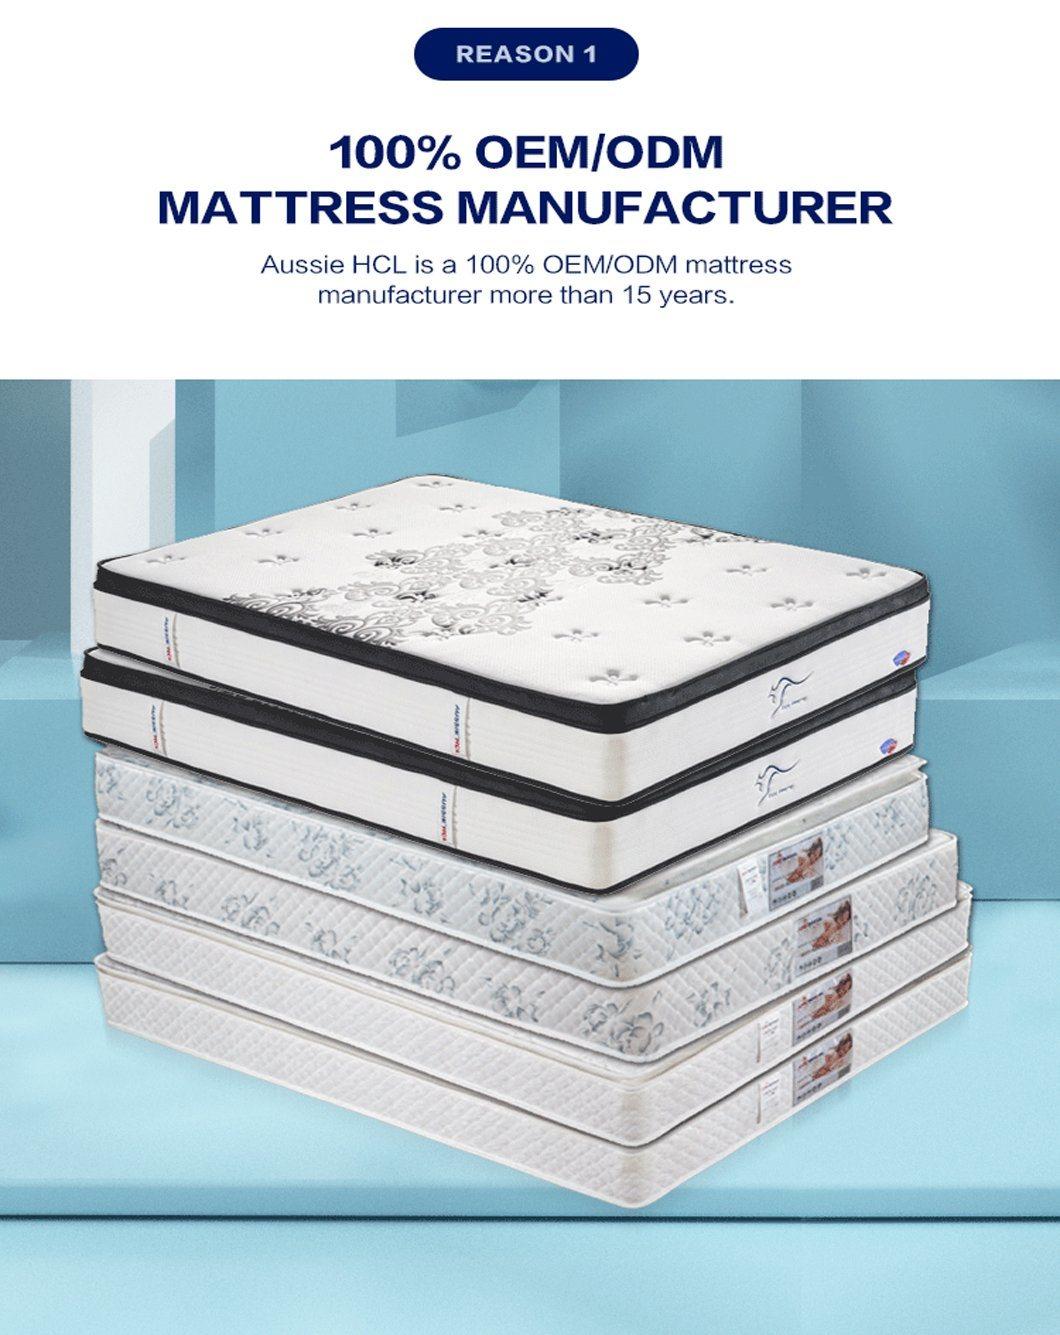 China Wholesale Aussie Quality Hotel Memory Foam Mattress in a Box Bedroom Furniture